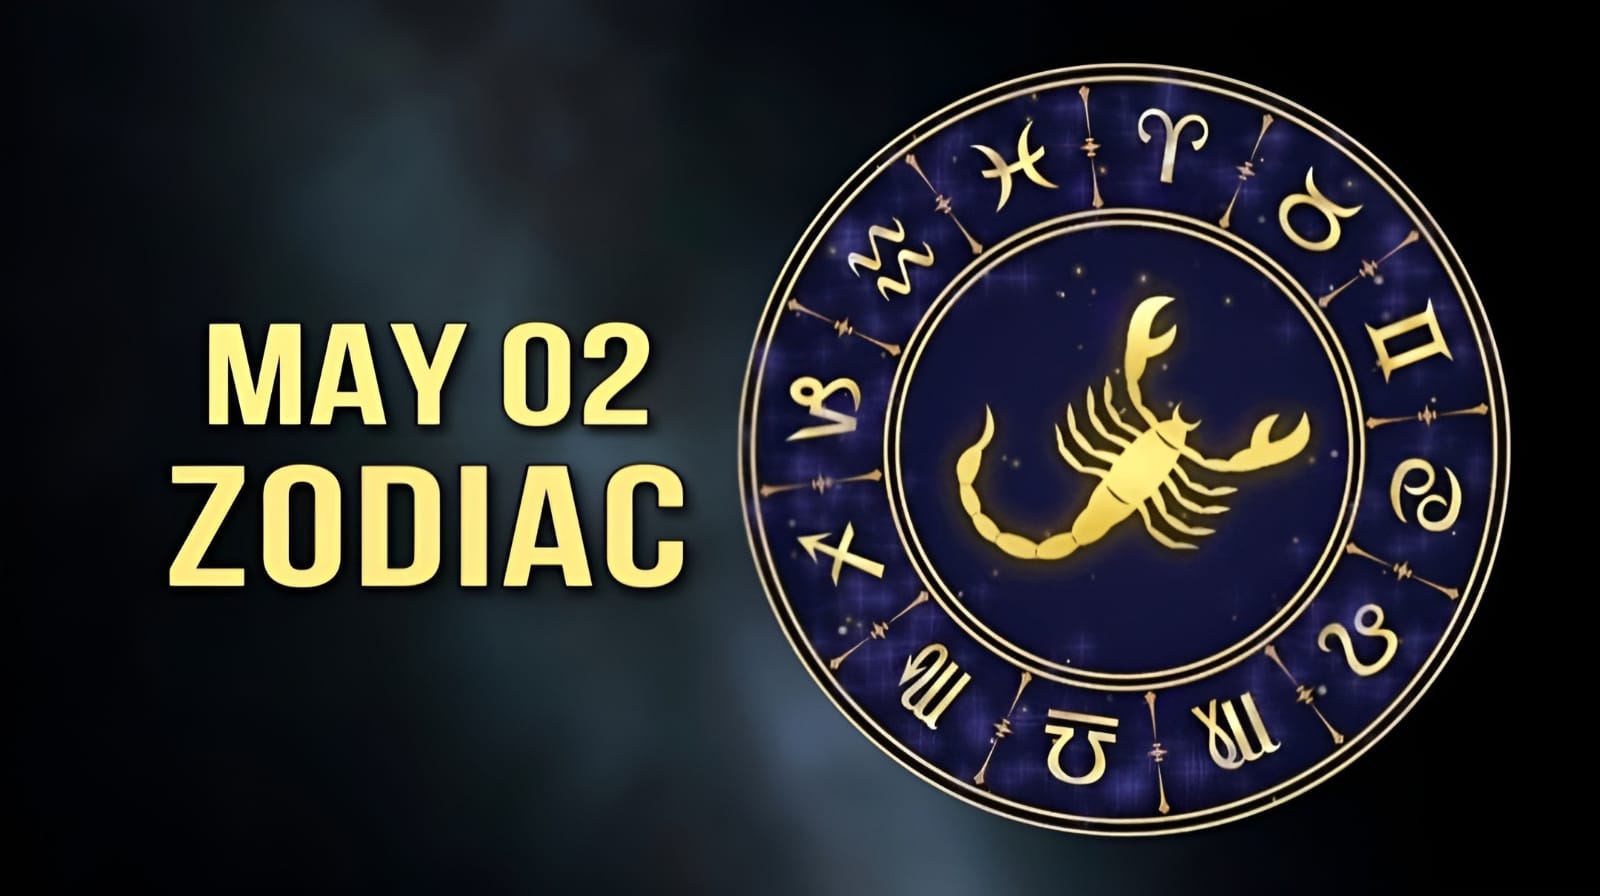 May 2 Zodiac